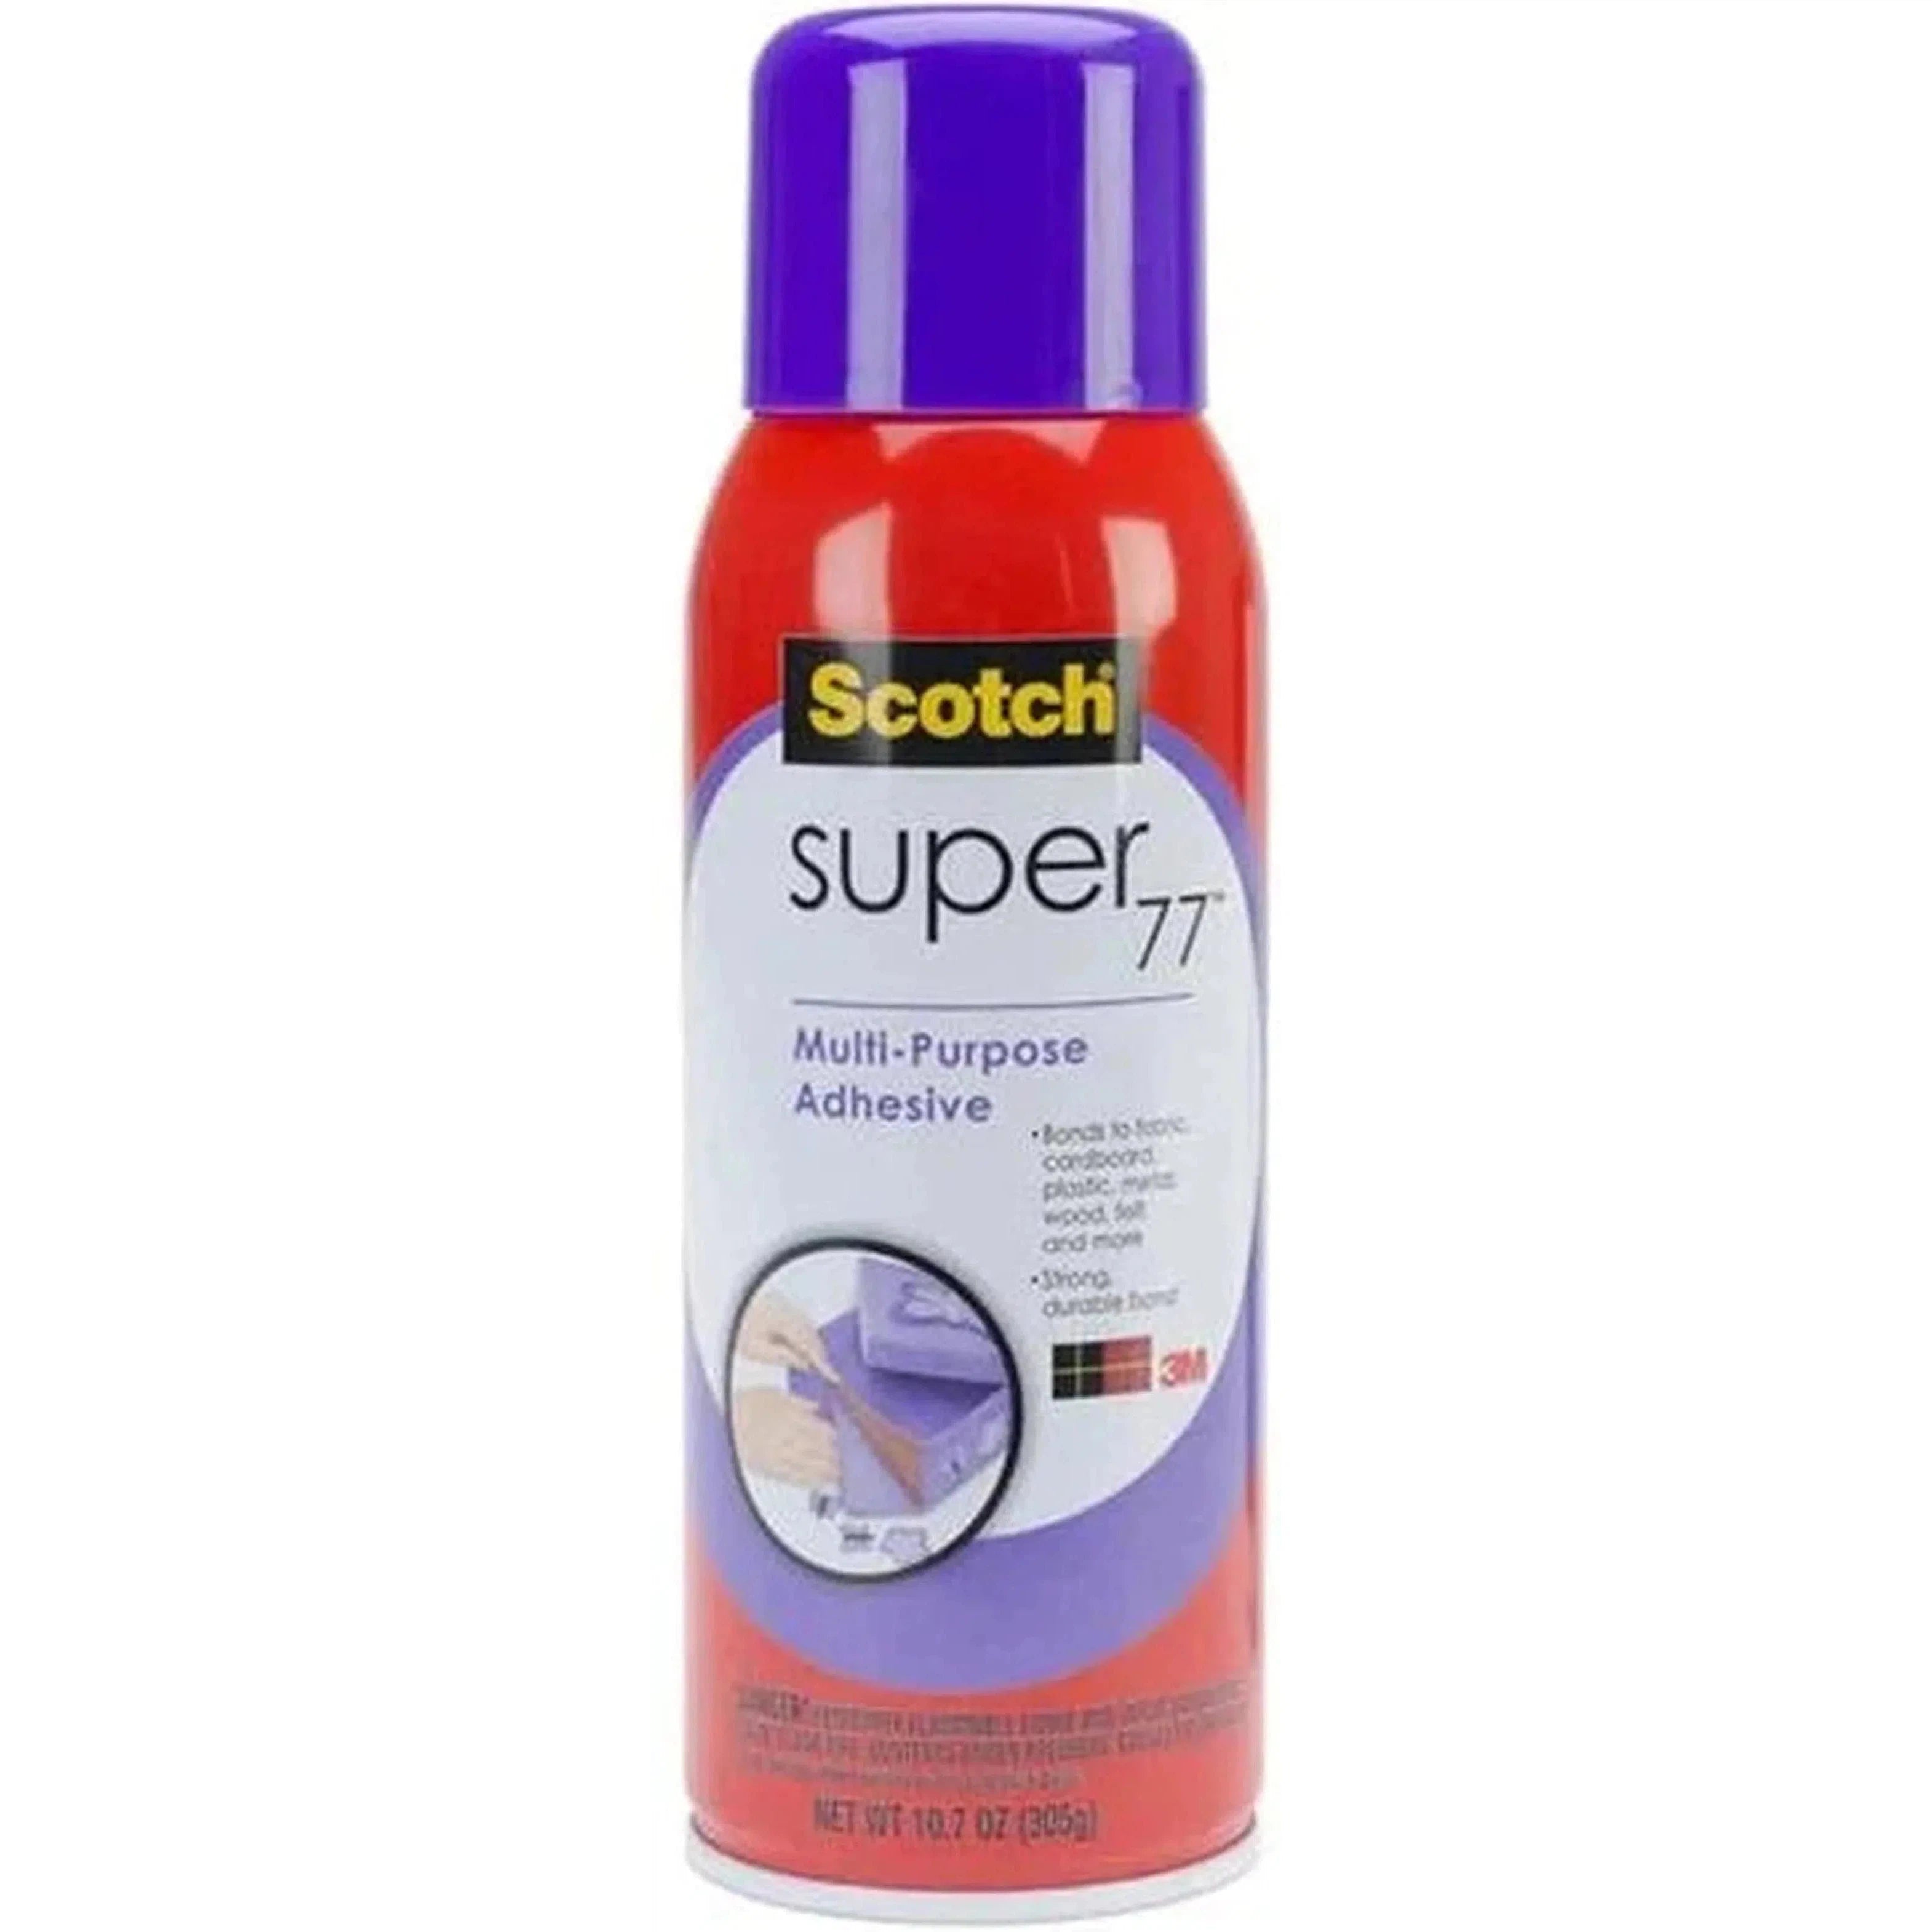 3M Scotch Multi-Purpose Spray Adhesive-Cleaning Supplies-3M Scotch-Star Light Kuwait